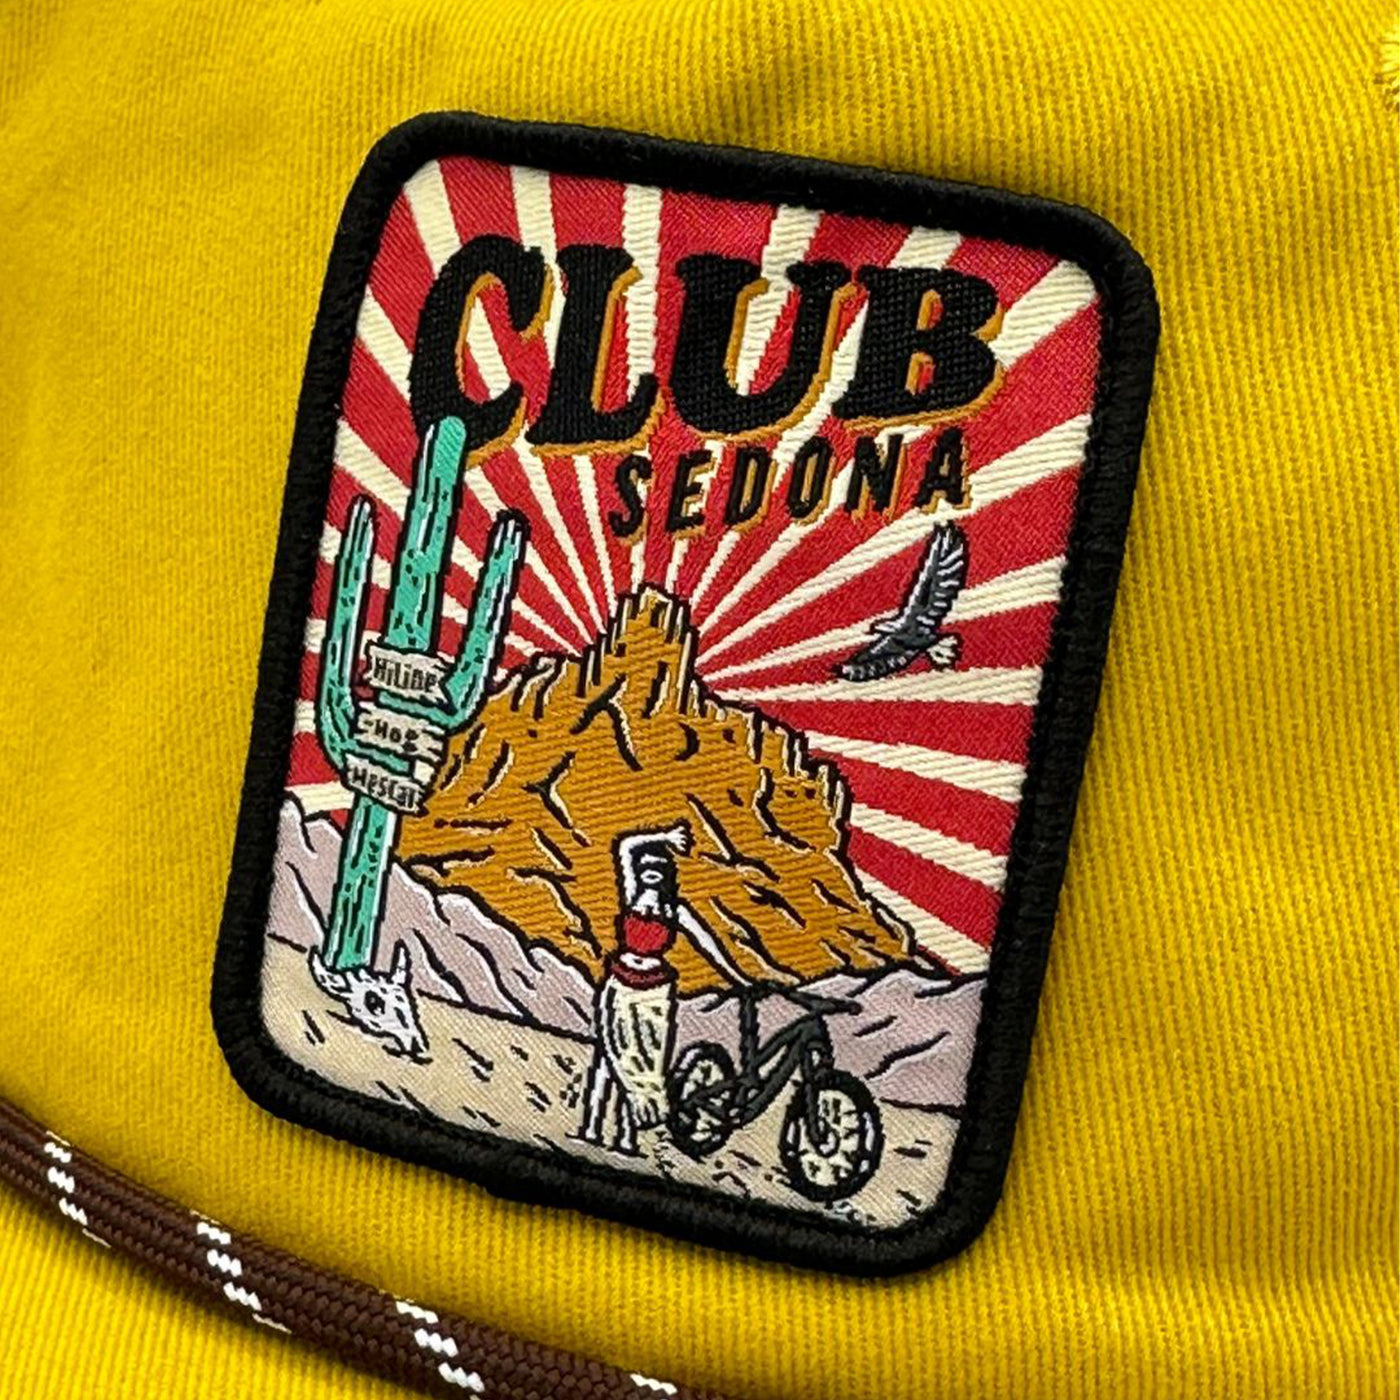 2024 Festival "Club Sedona" Hat